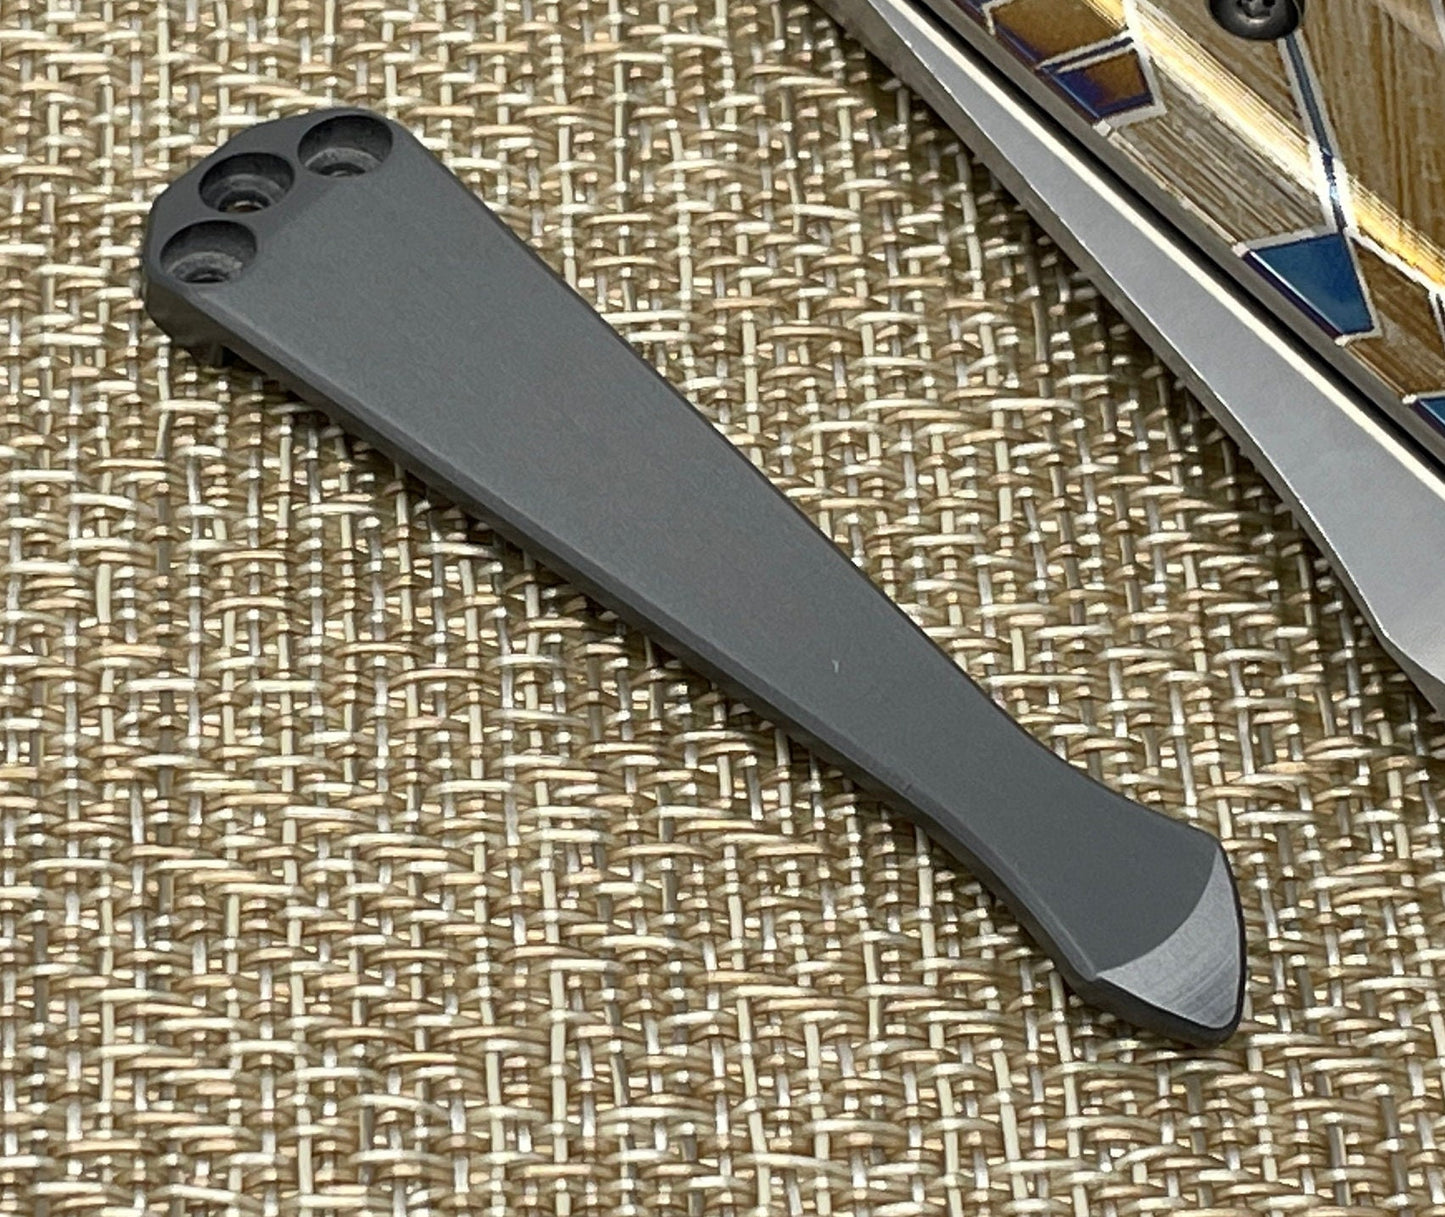 TOPO engraved Black Zirconium Scales for Benchmade GRIPTILIAN 551 & 550